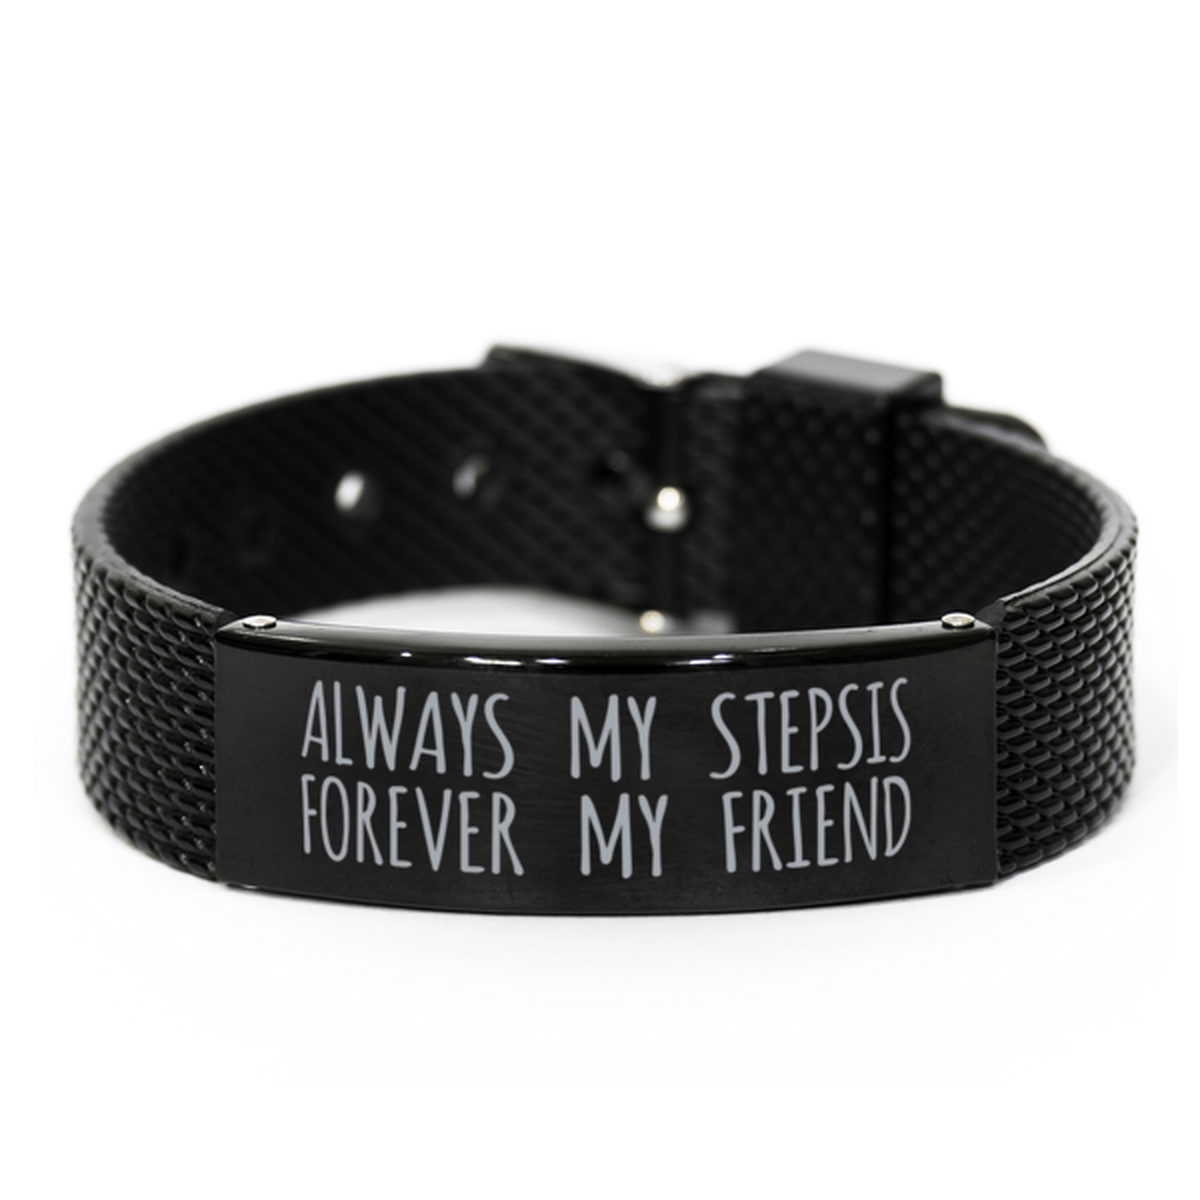 Inspirational Stepsis Black Shark Mesh Bracelet, Always My Stepsis Forever My Friend, Best Birthday Gifts for Family Friends